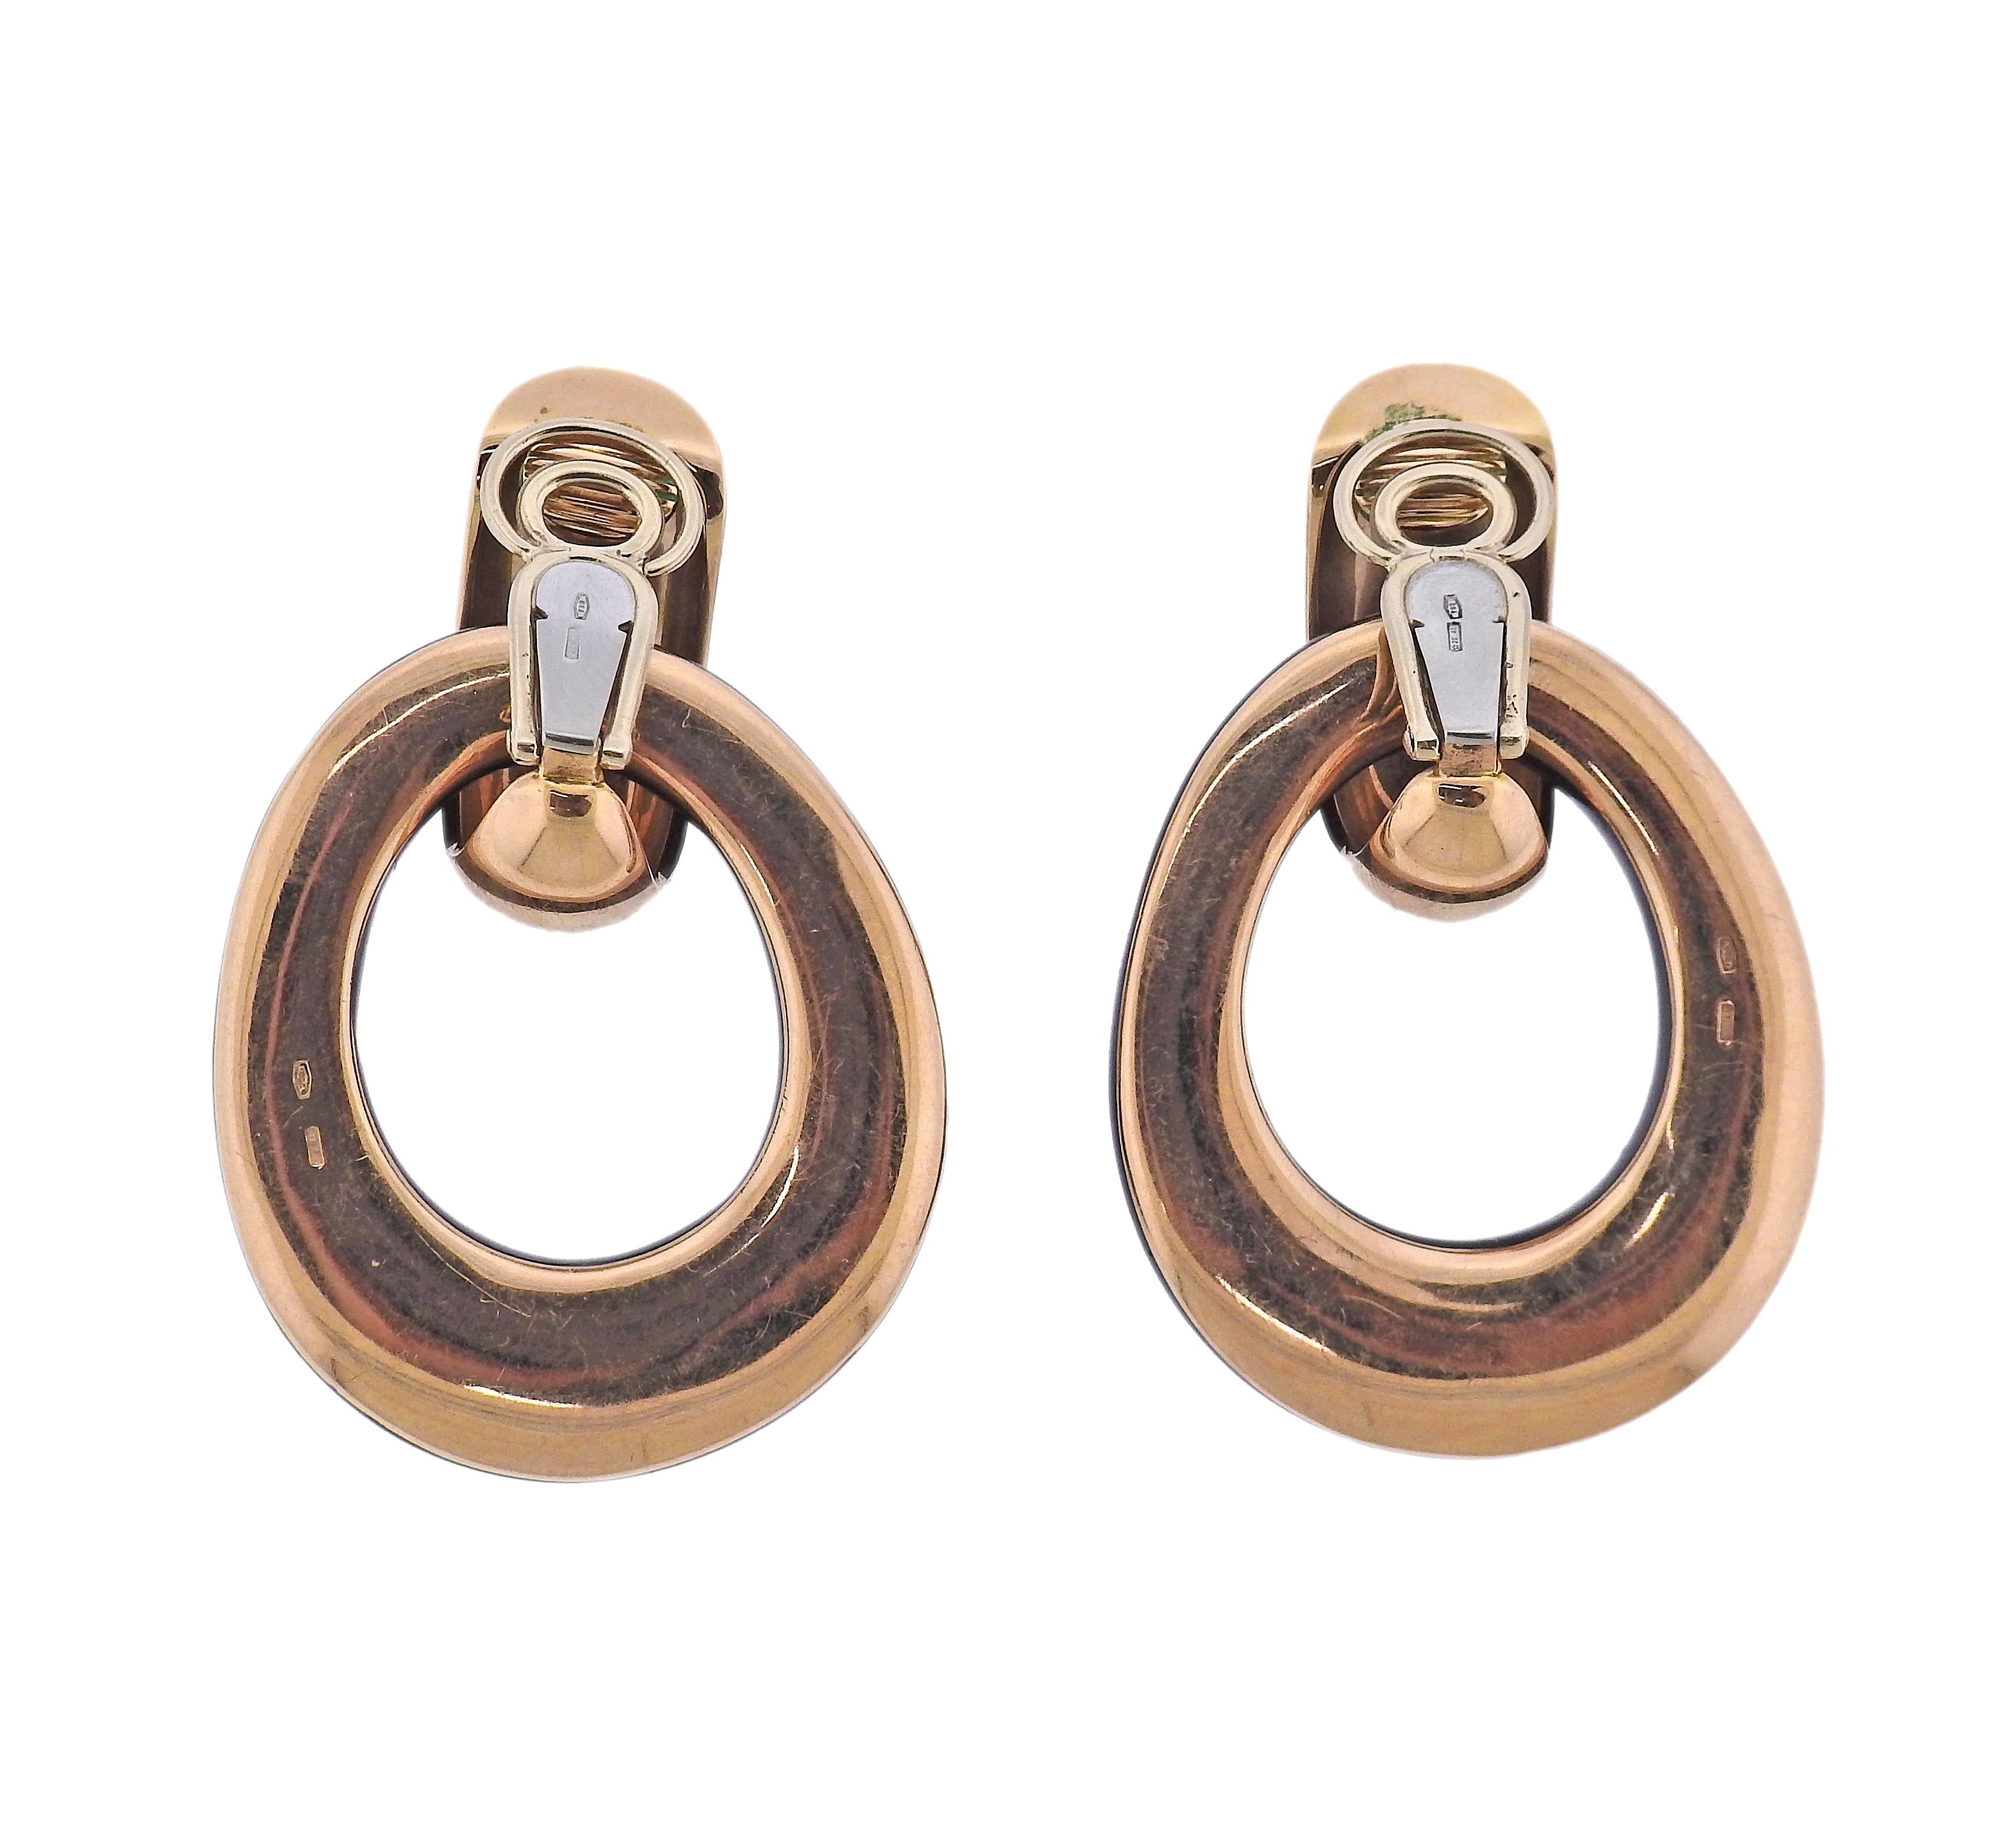 Italian made 18k rose gold doorknocker earrings, with removable ebony wood  drops, and enamel inlayed top. Earrings measure 2.25